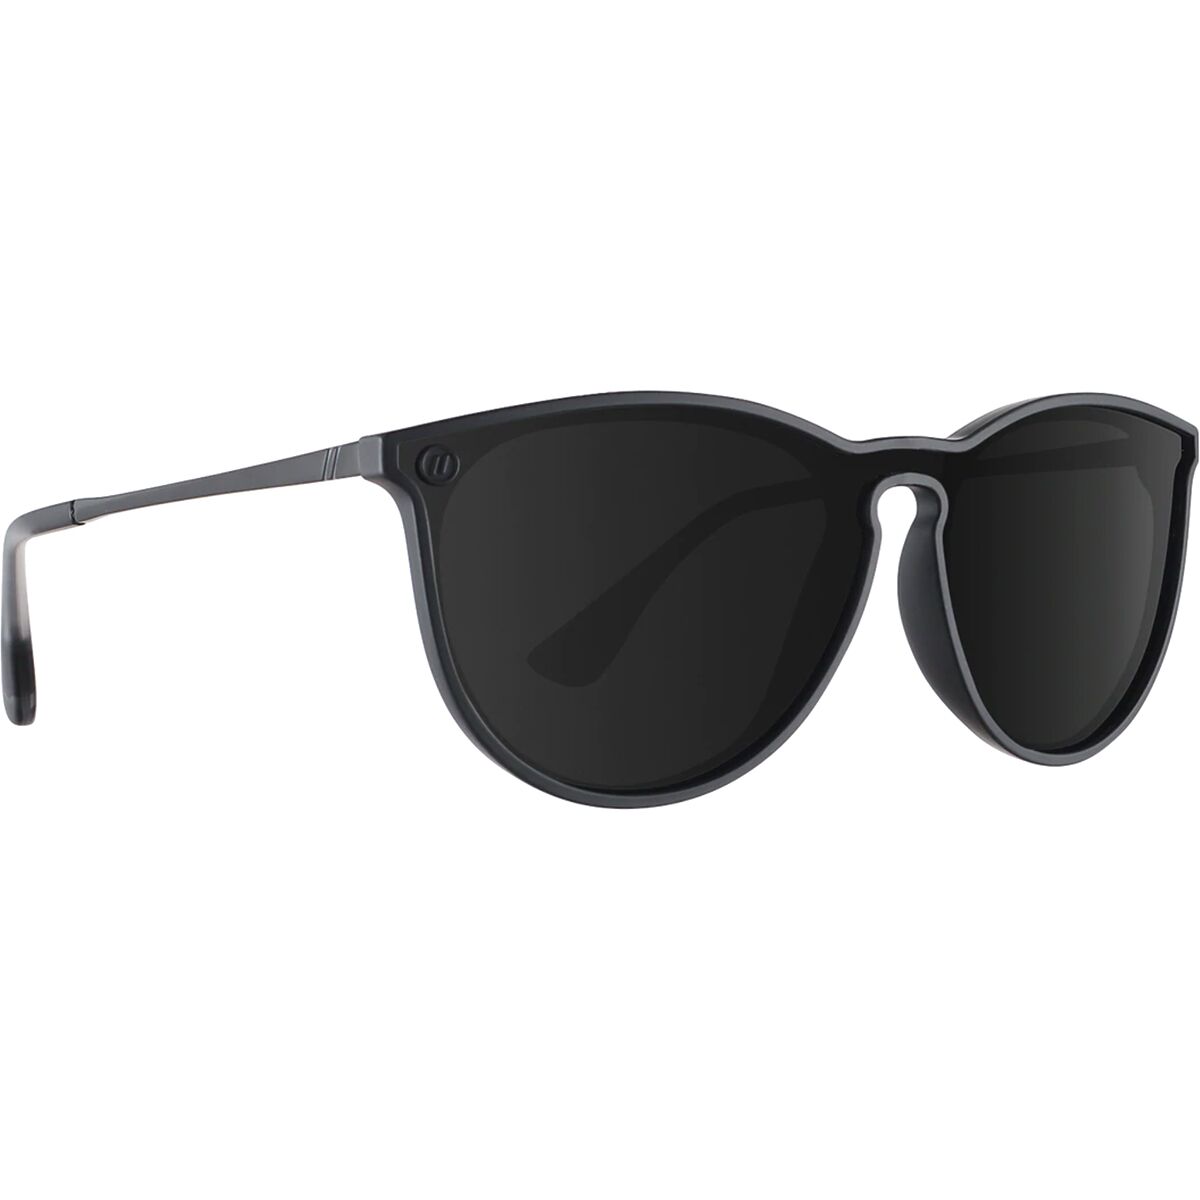 Blenders Eyewear Legend Bound North Park X2 Polarized Sunglasses